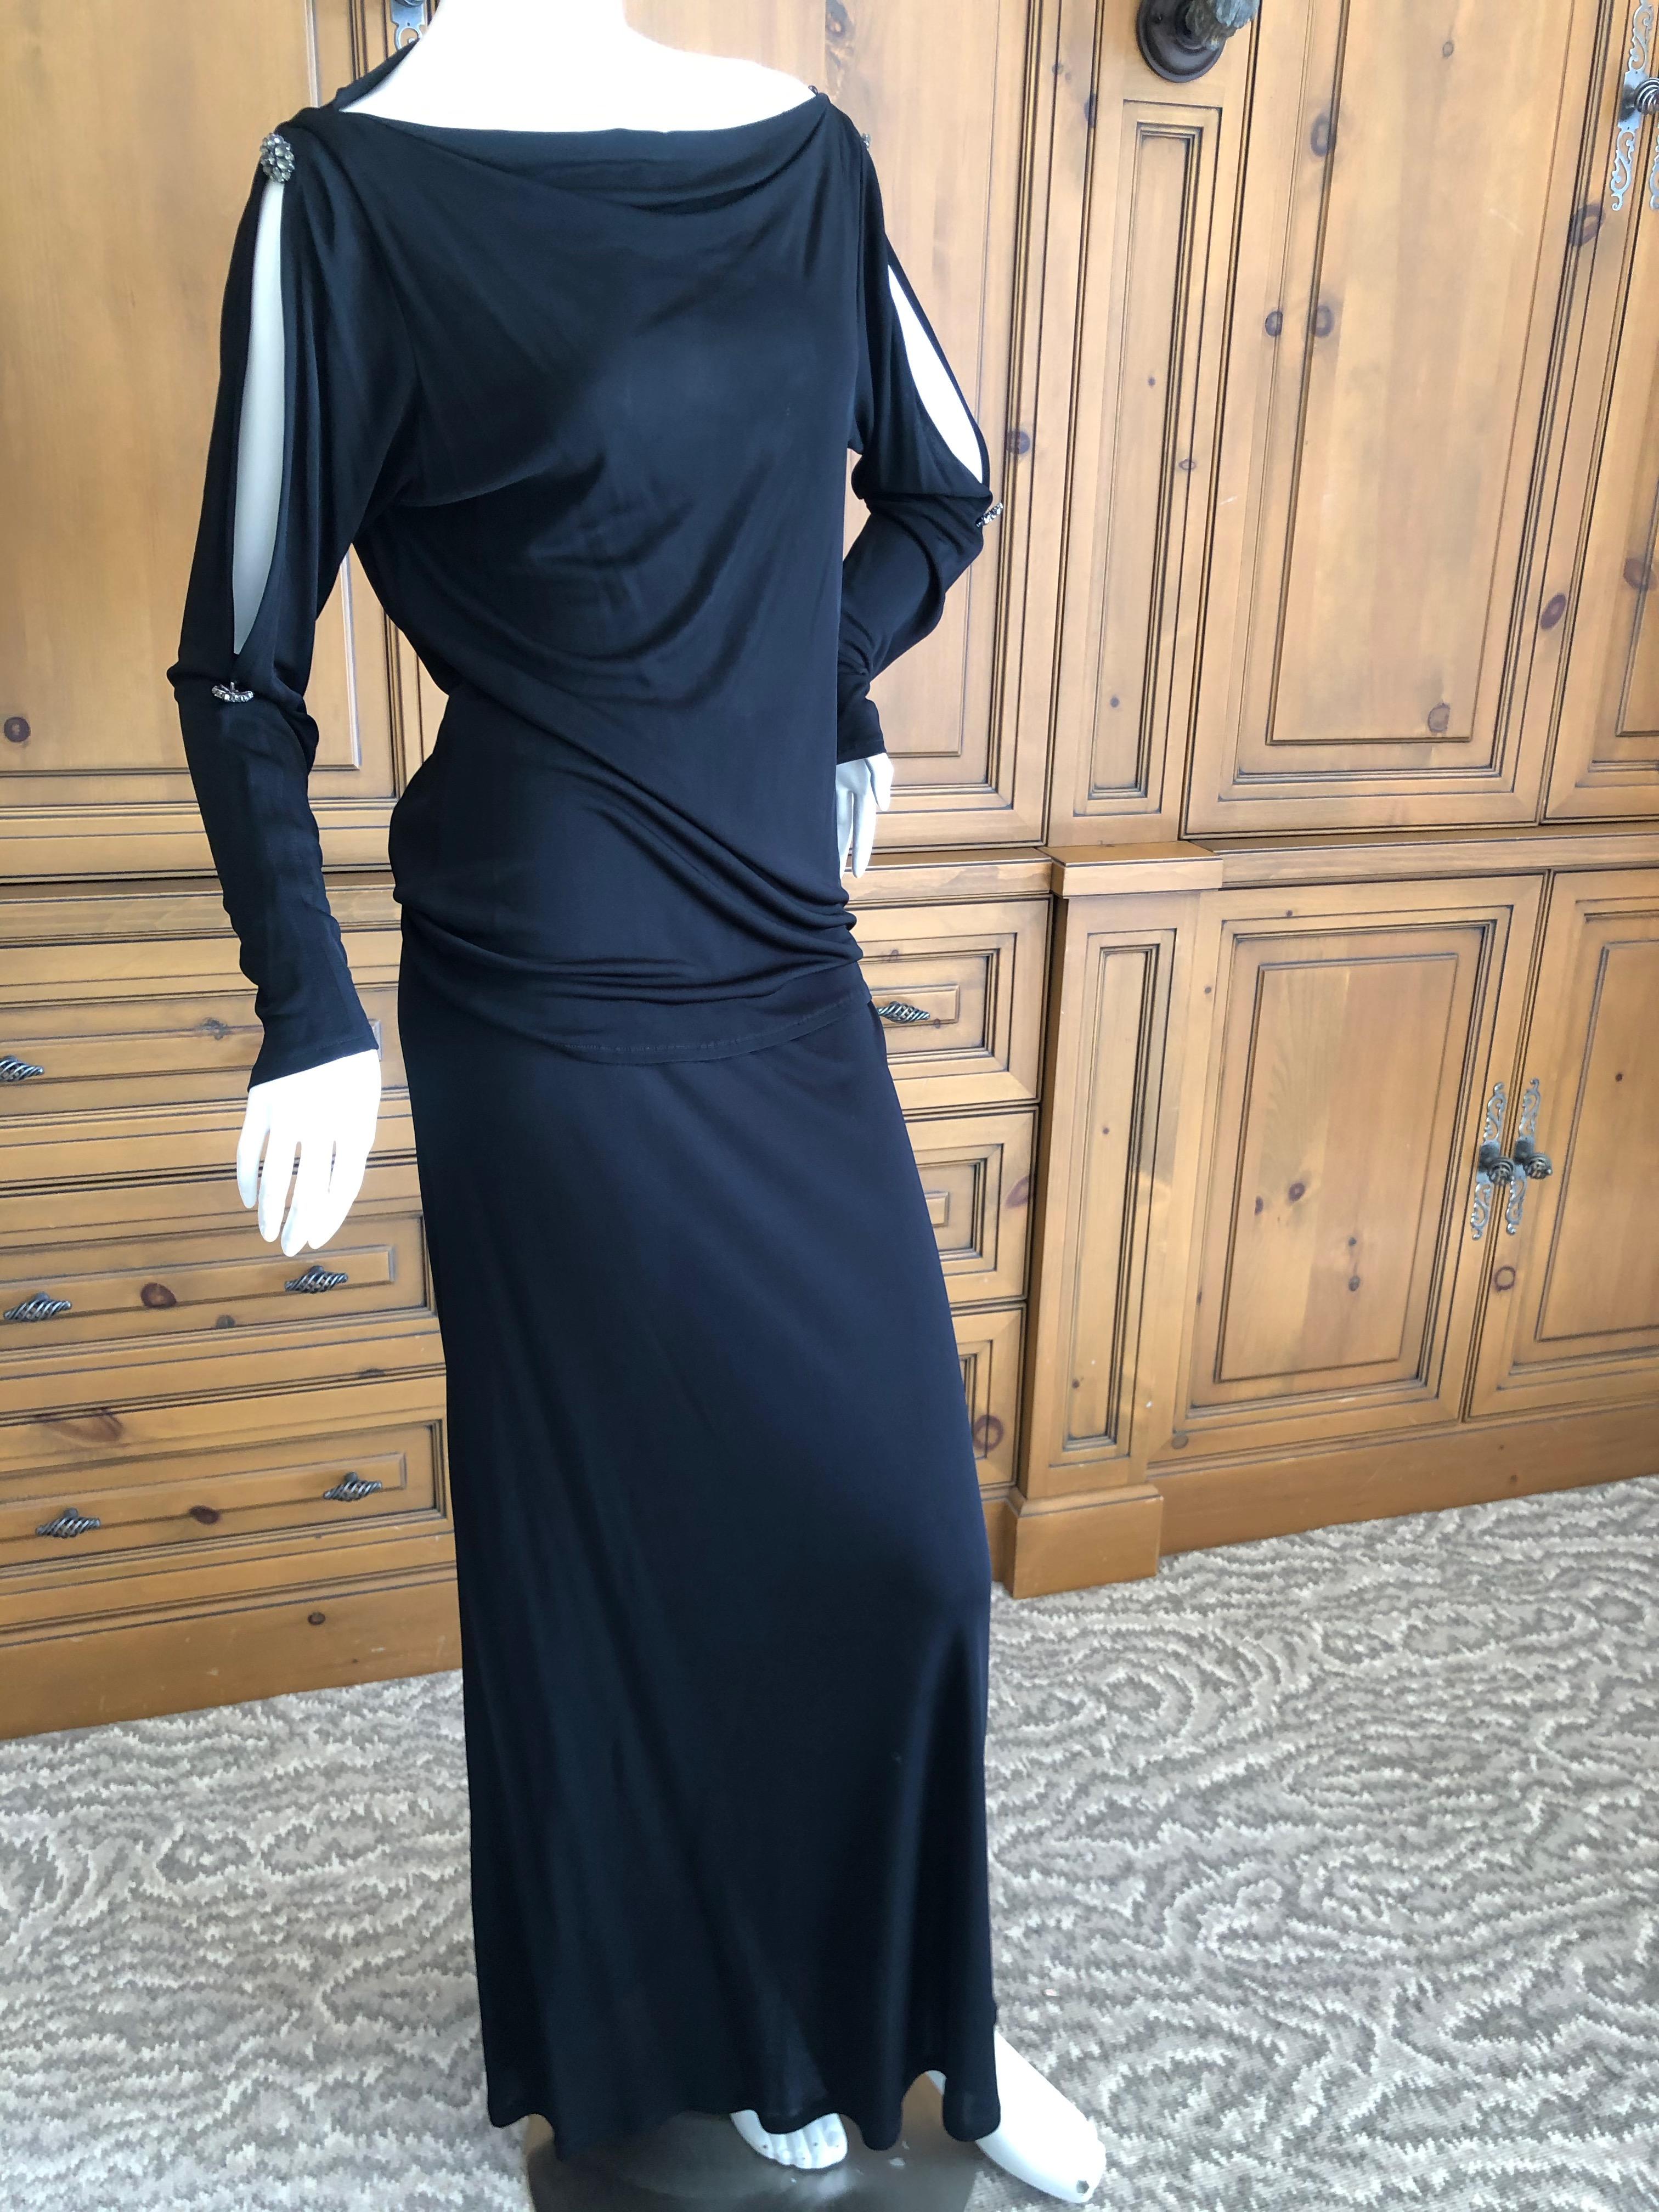 Yves Saint Laurent Rive Gauche 1980's Black Skirt Suit w Jeweled Cold Shoulders For Sale 5